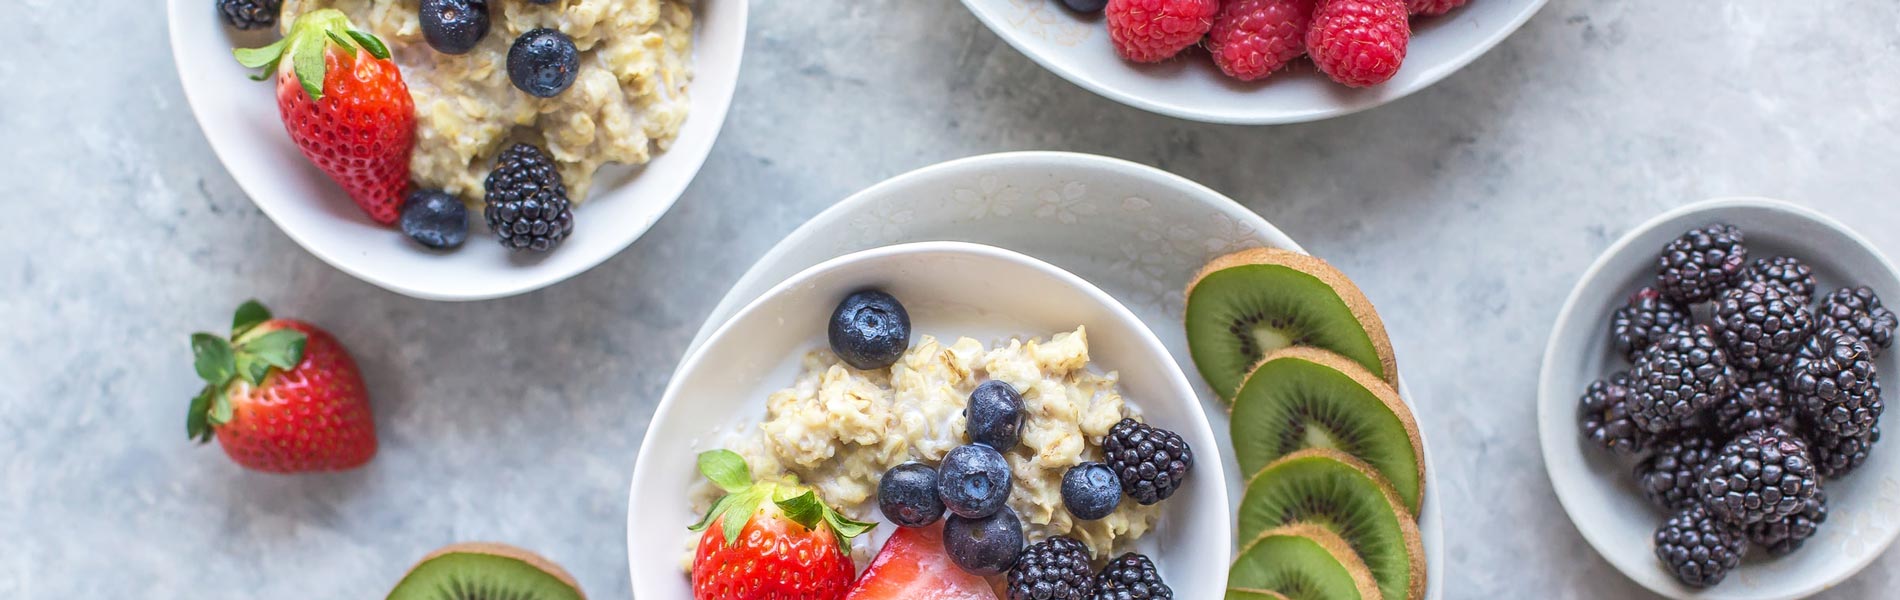 Porridge with fresh fruits